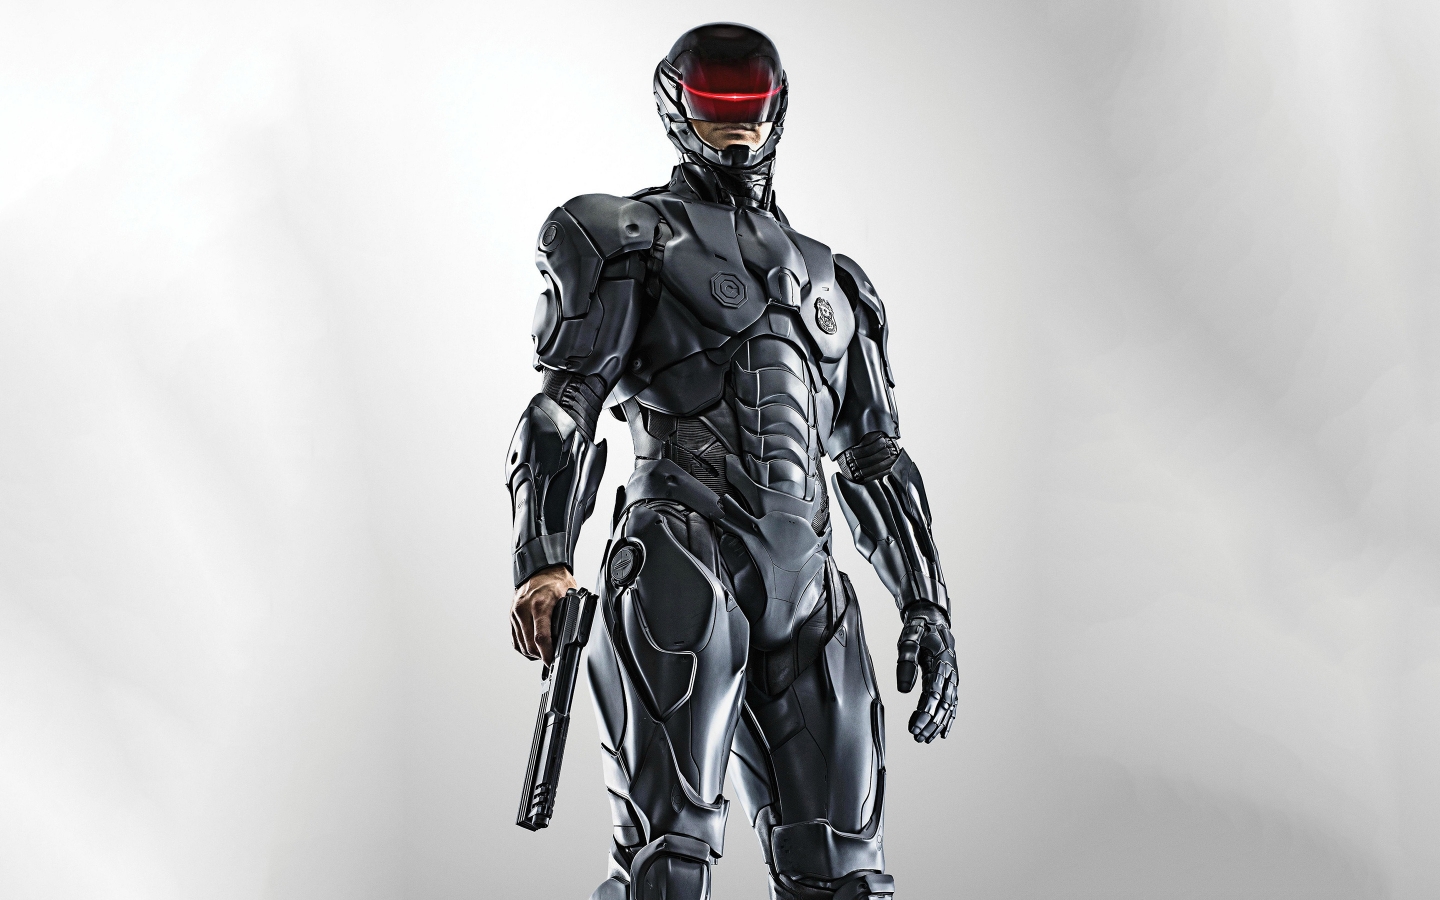 Robocop 2014 Poster for 1440 x 900 widescreen resolution